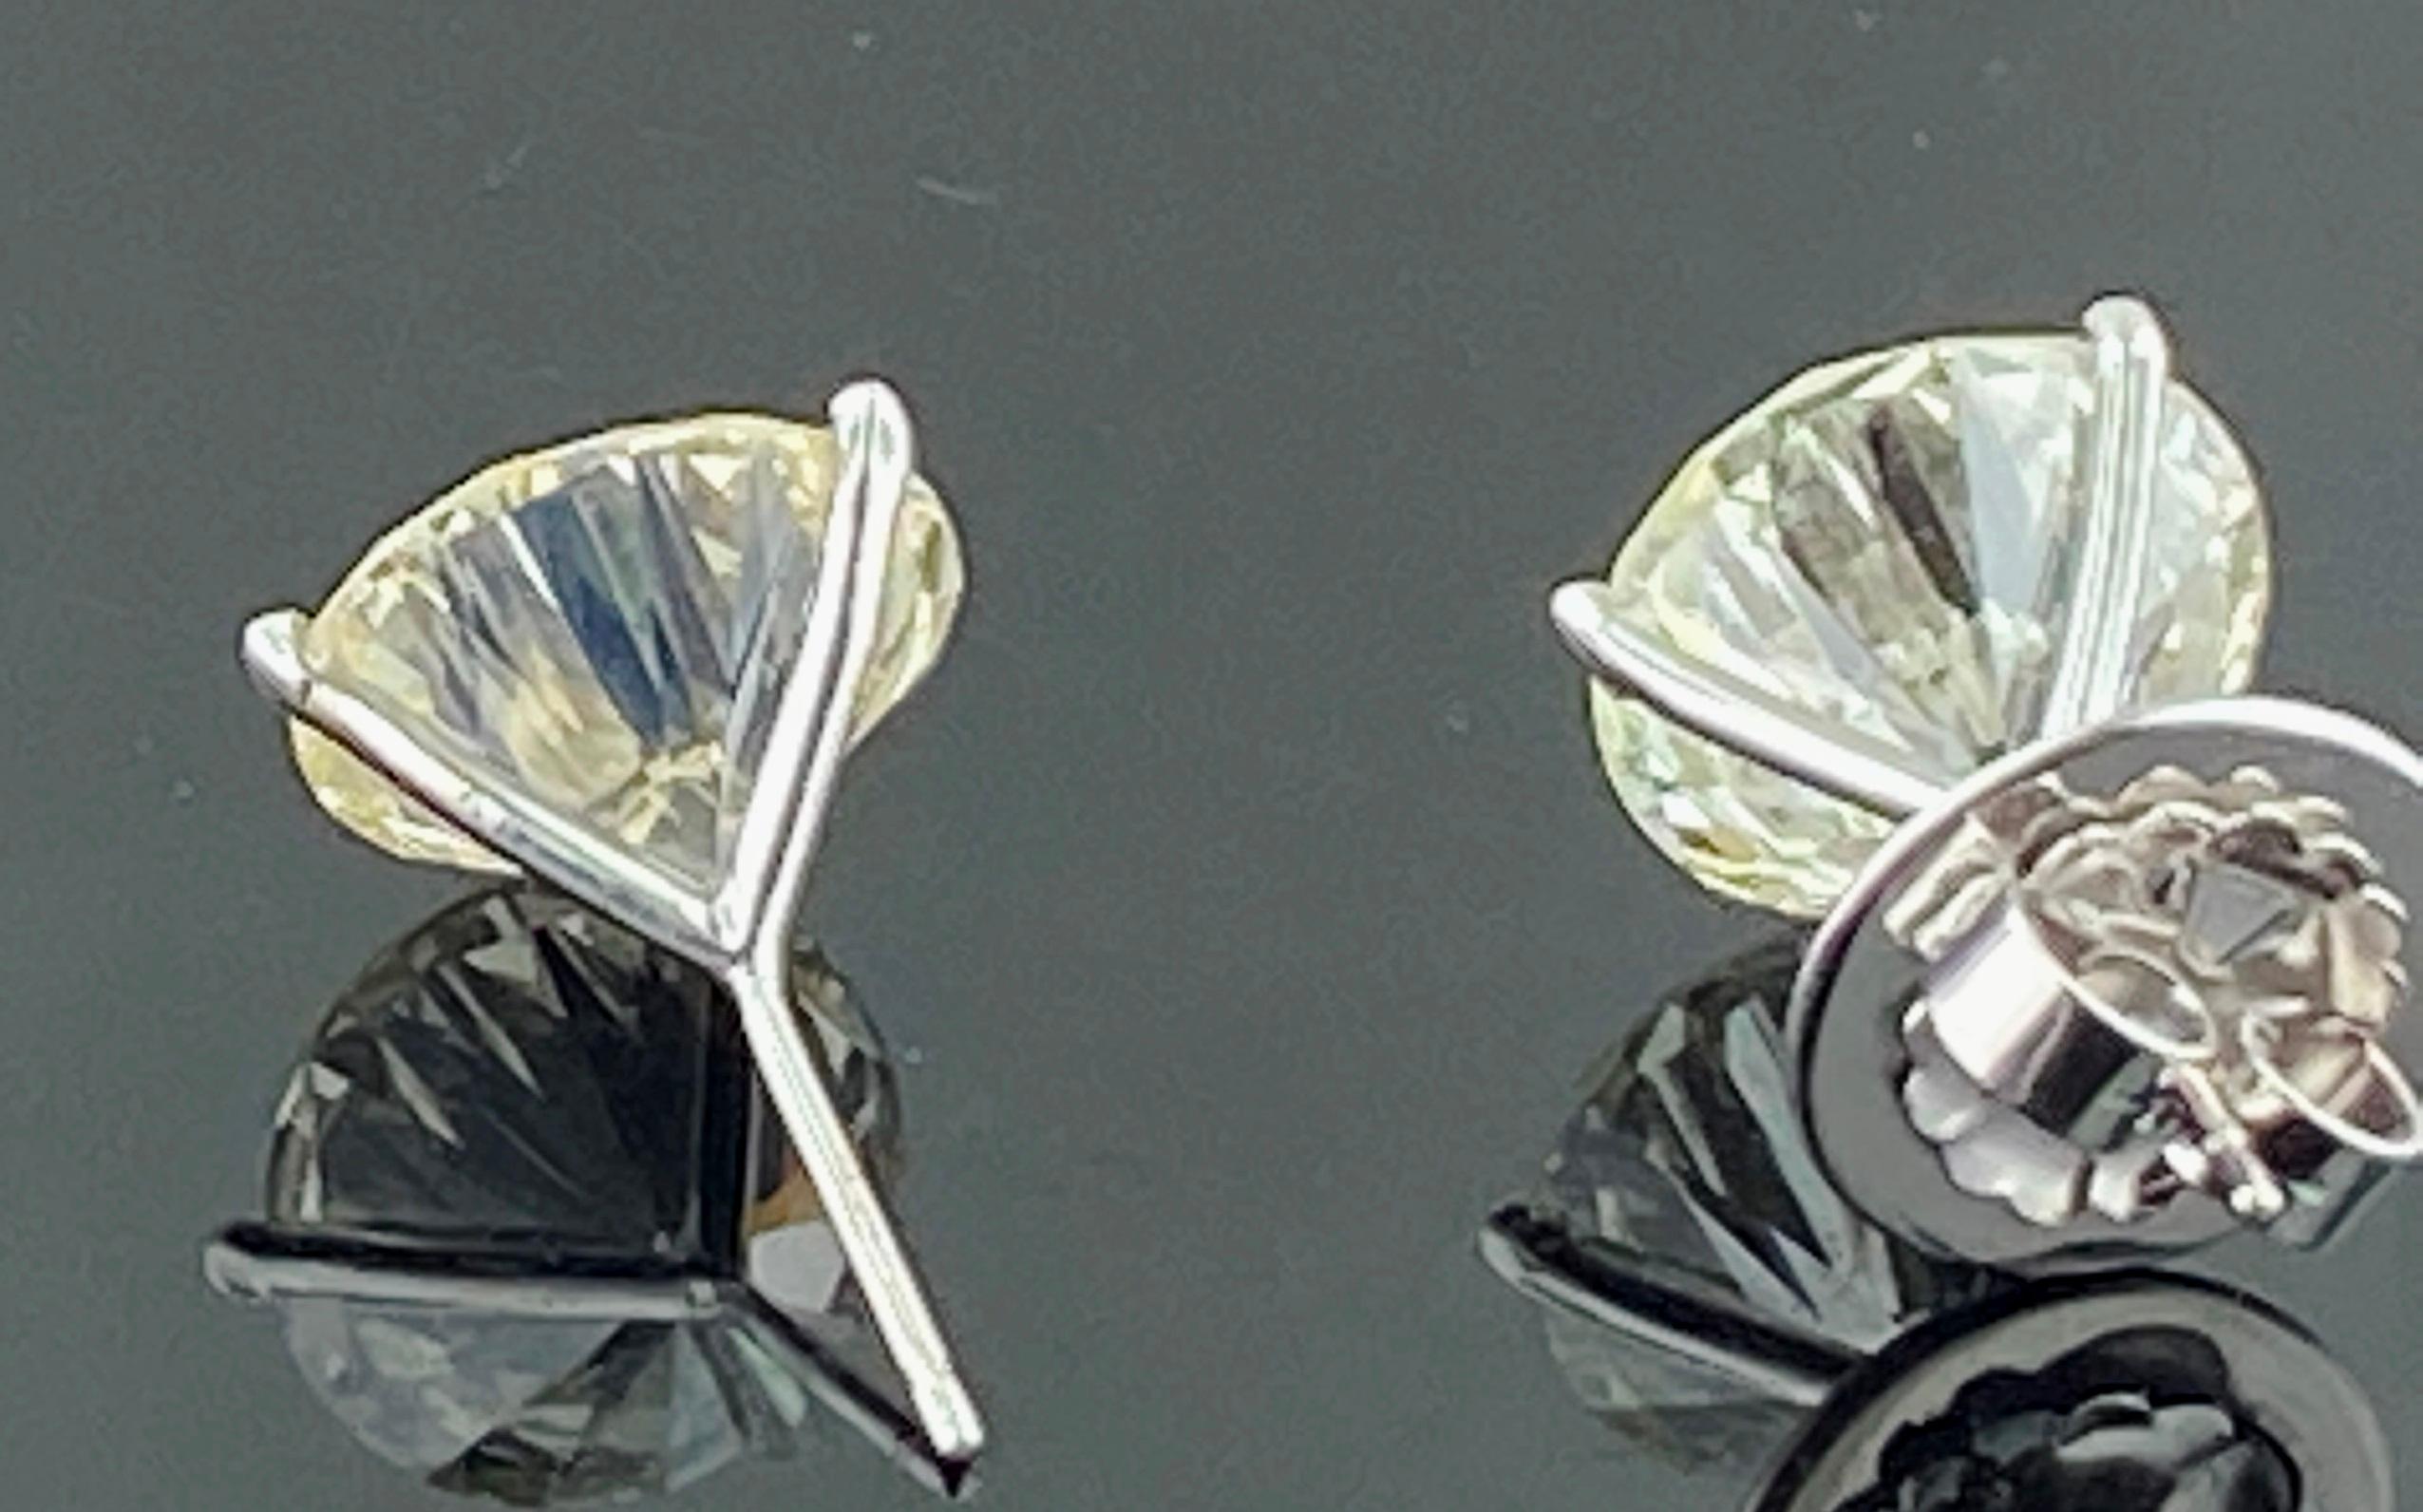 7 carat diamond earrings price